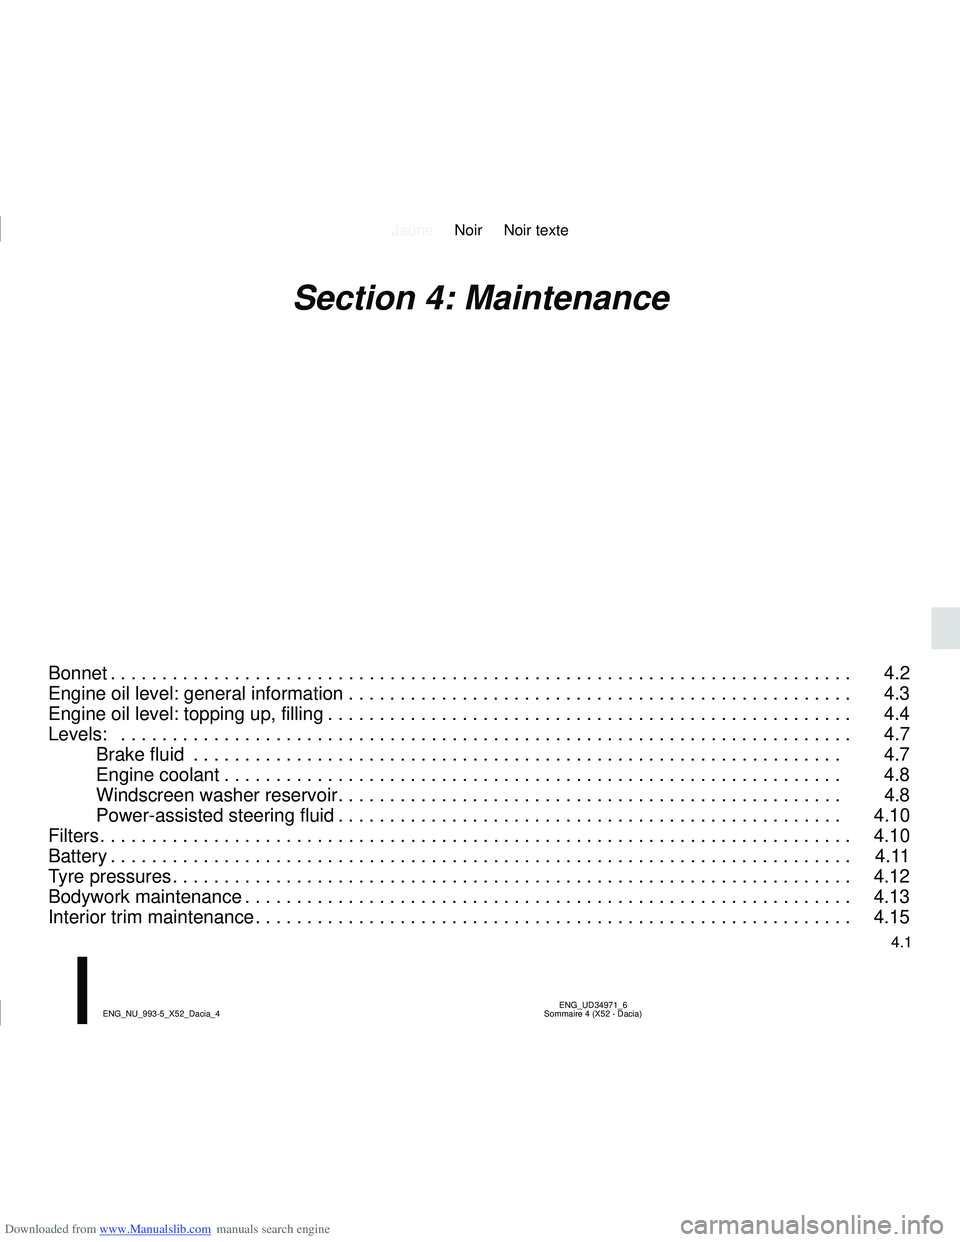 DACIA SANDERO 2015  Owners Manual Downloaded from www.Manualslib.com manuals search engine JauneNoir Noir texte
4.1
ENG_UD34971_6
Sommaire 4 (X52 - Dacia)
ENG_NU_993-5_X52_Dacia_4
Section 4: Maintenance
Bonnet . . . . . . . . . . . . 